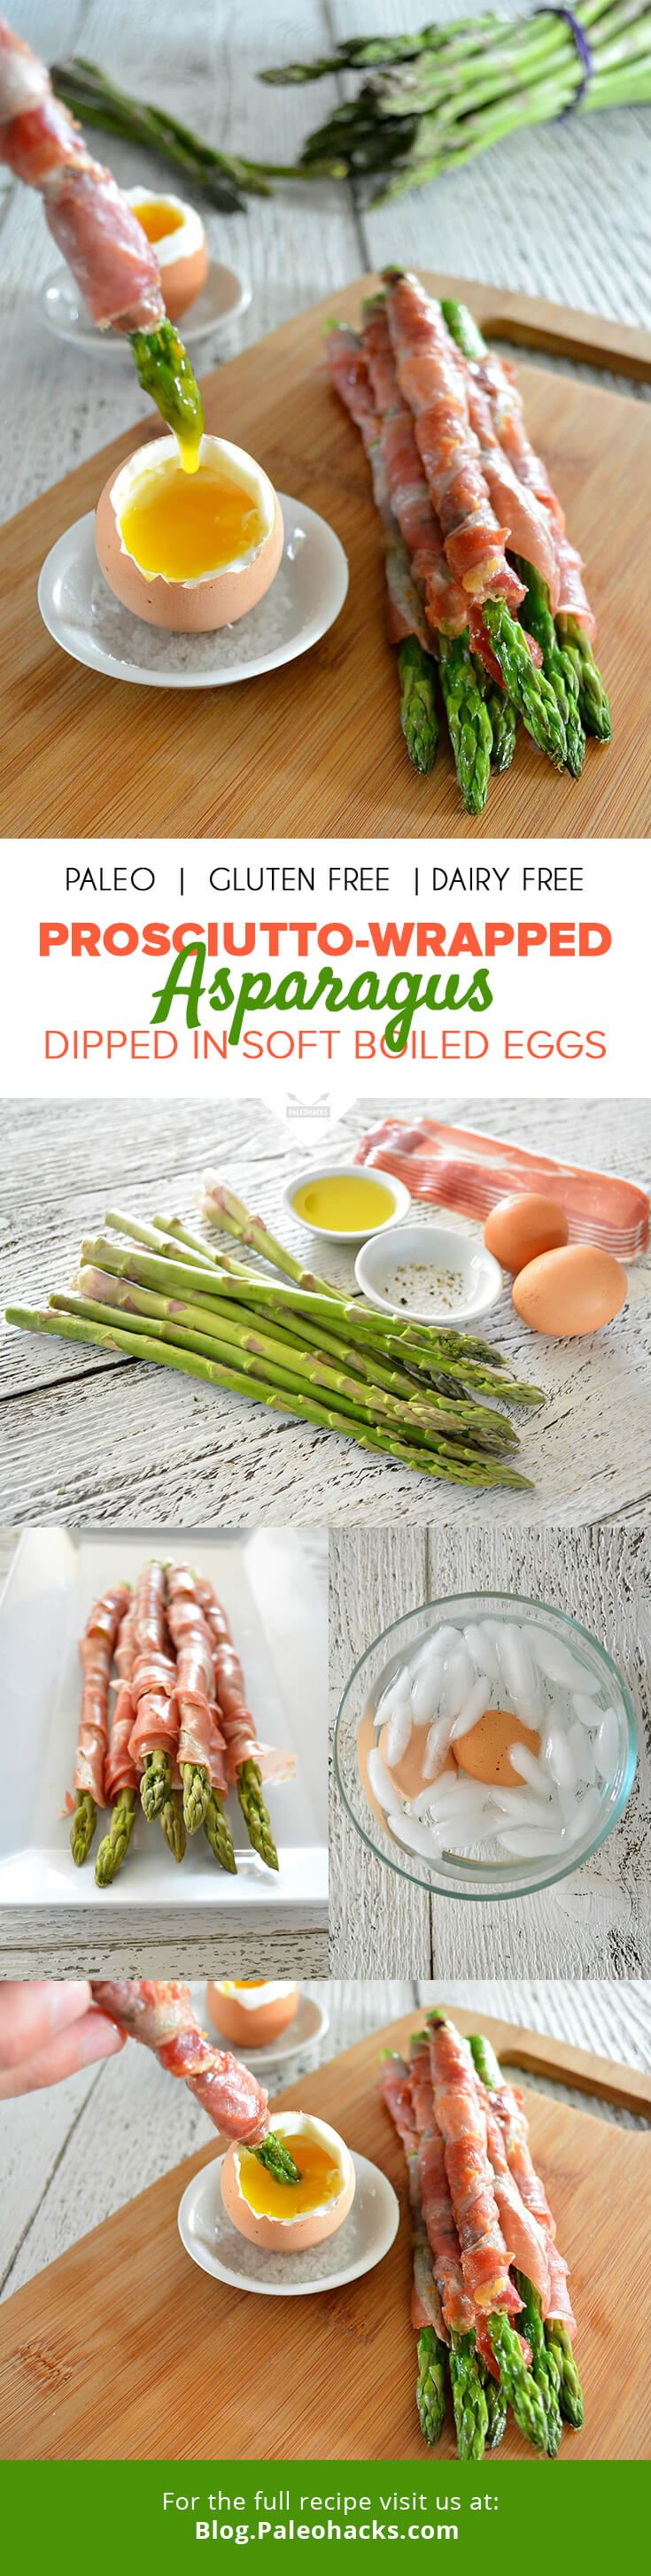 asparagus appetizer recipe